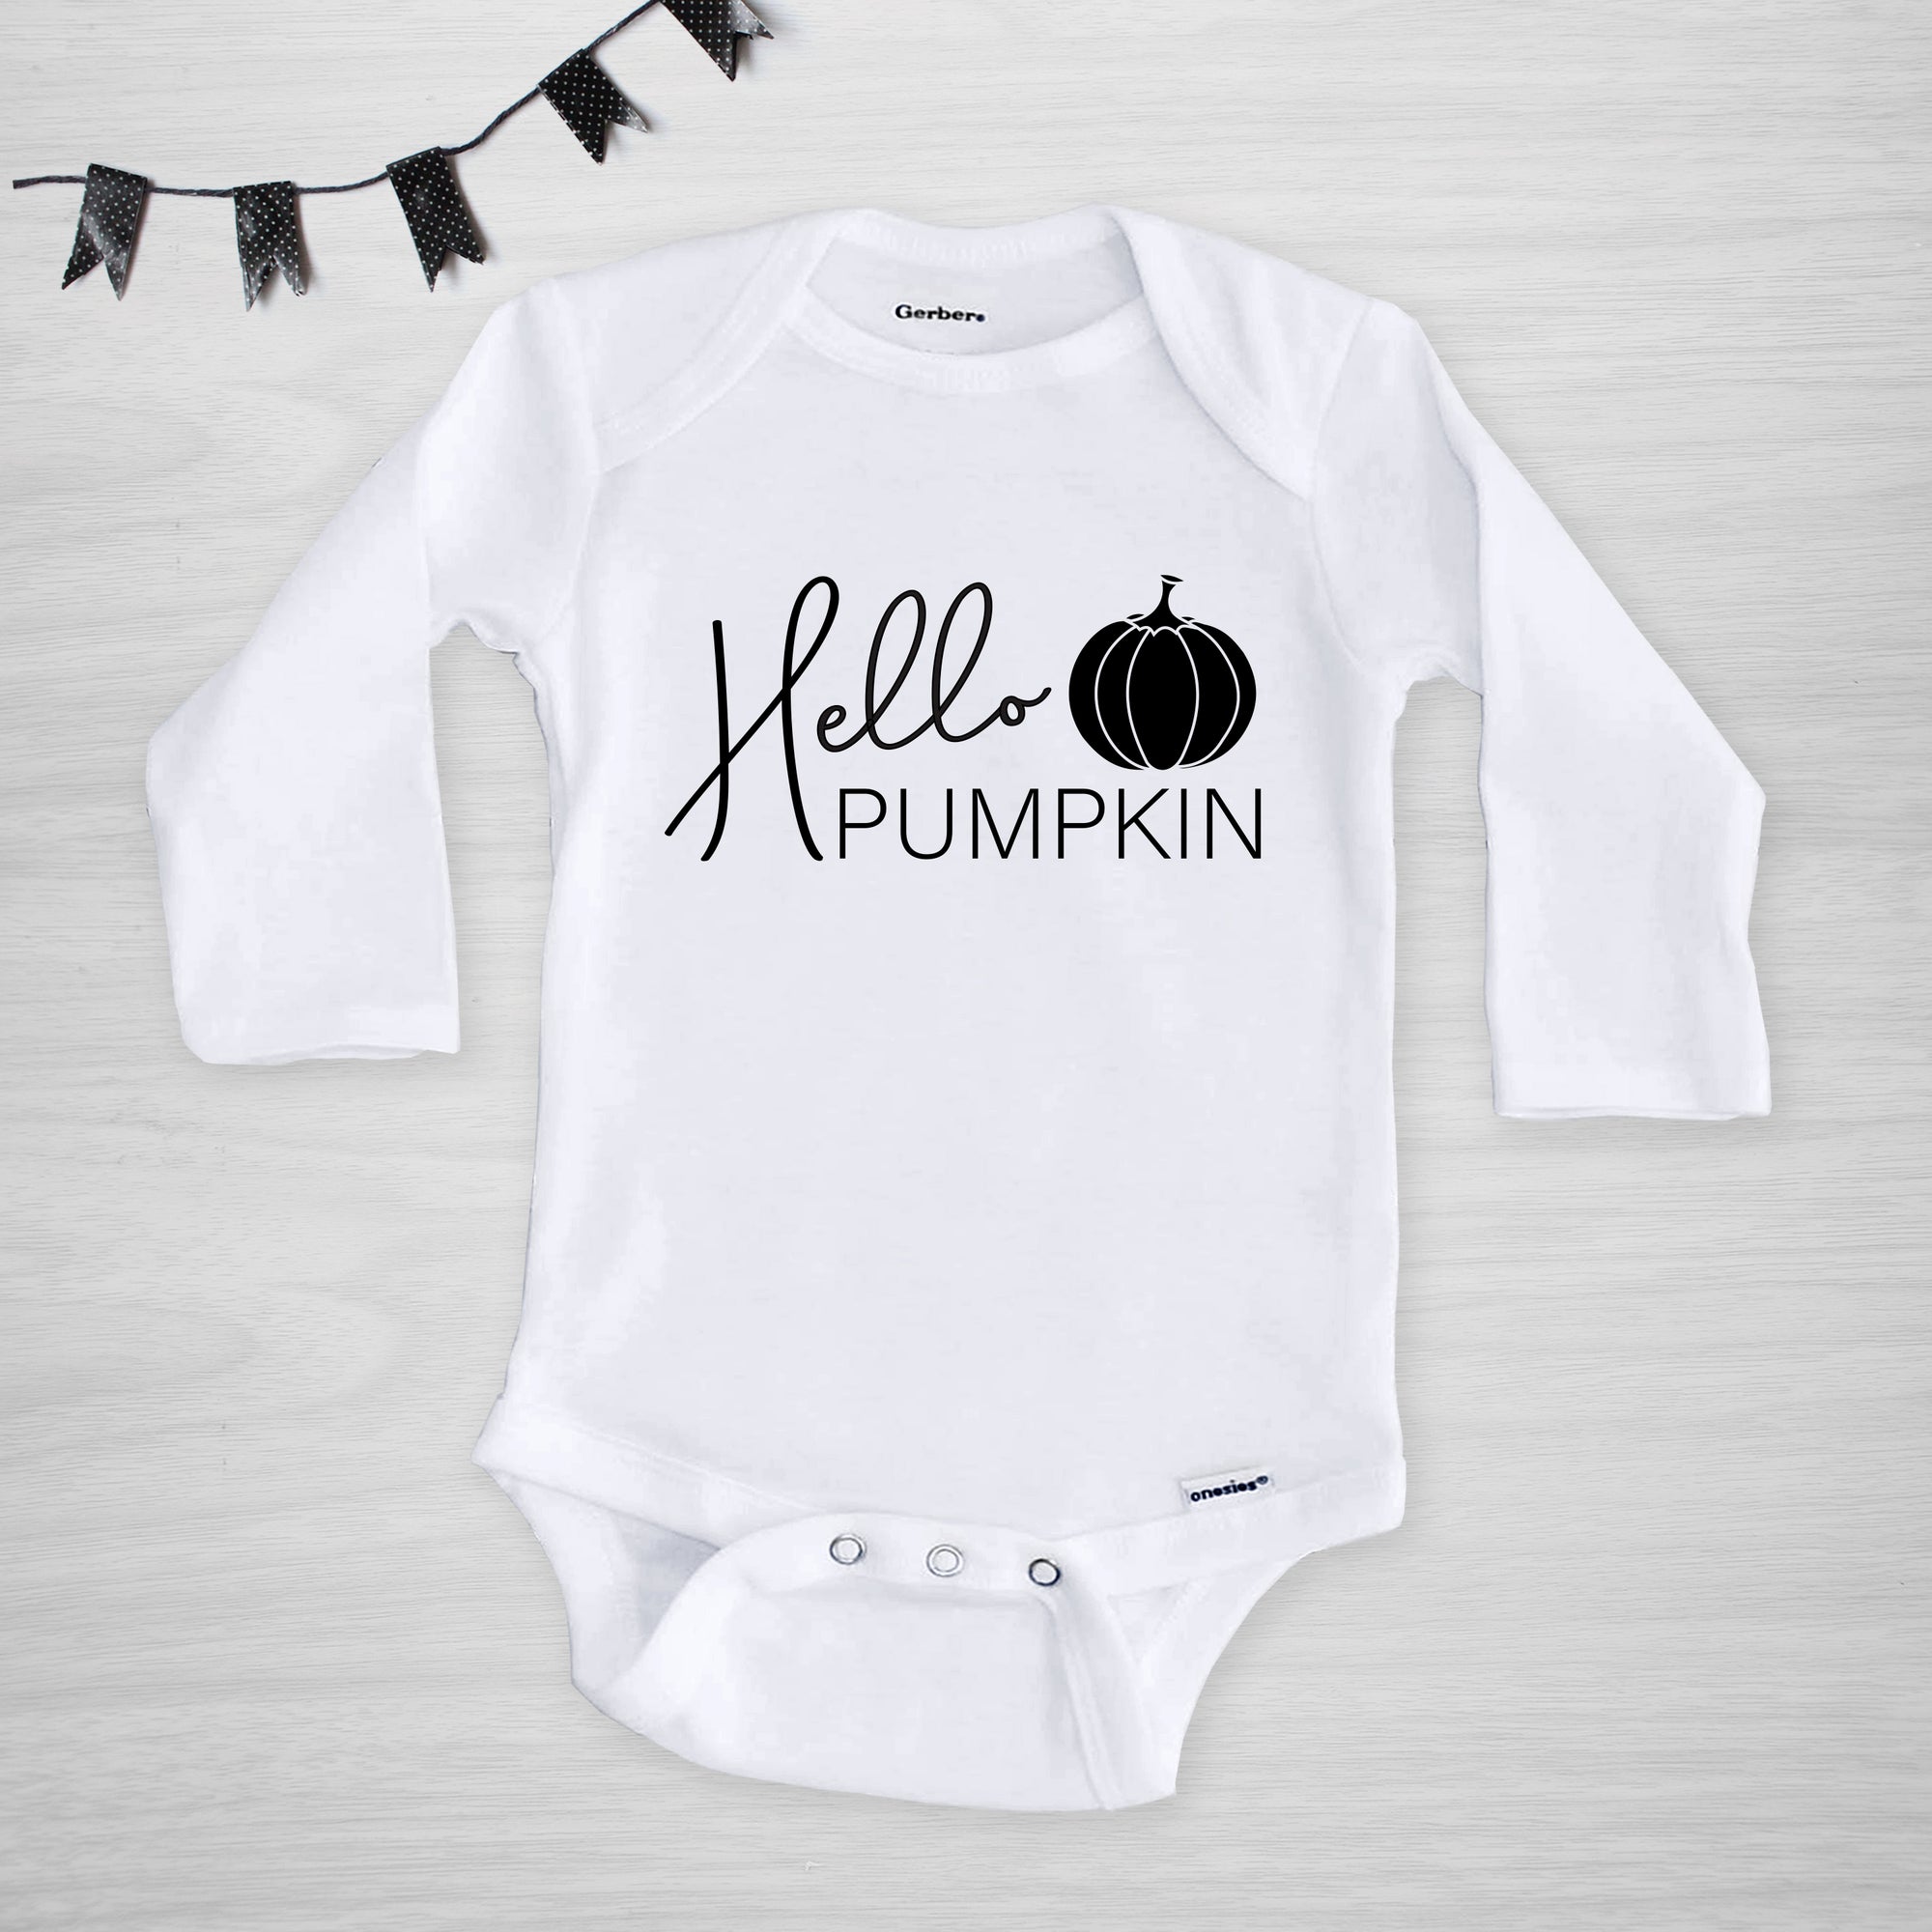 Hello Pumpkin Halloween Onesie in black and white, Pipsy.com, short sleeved